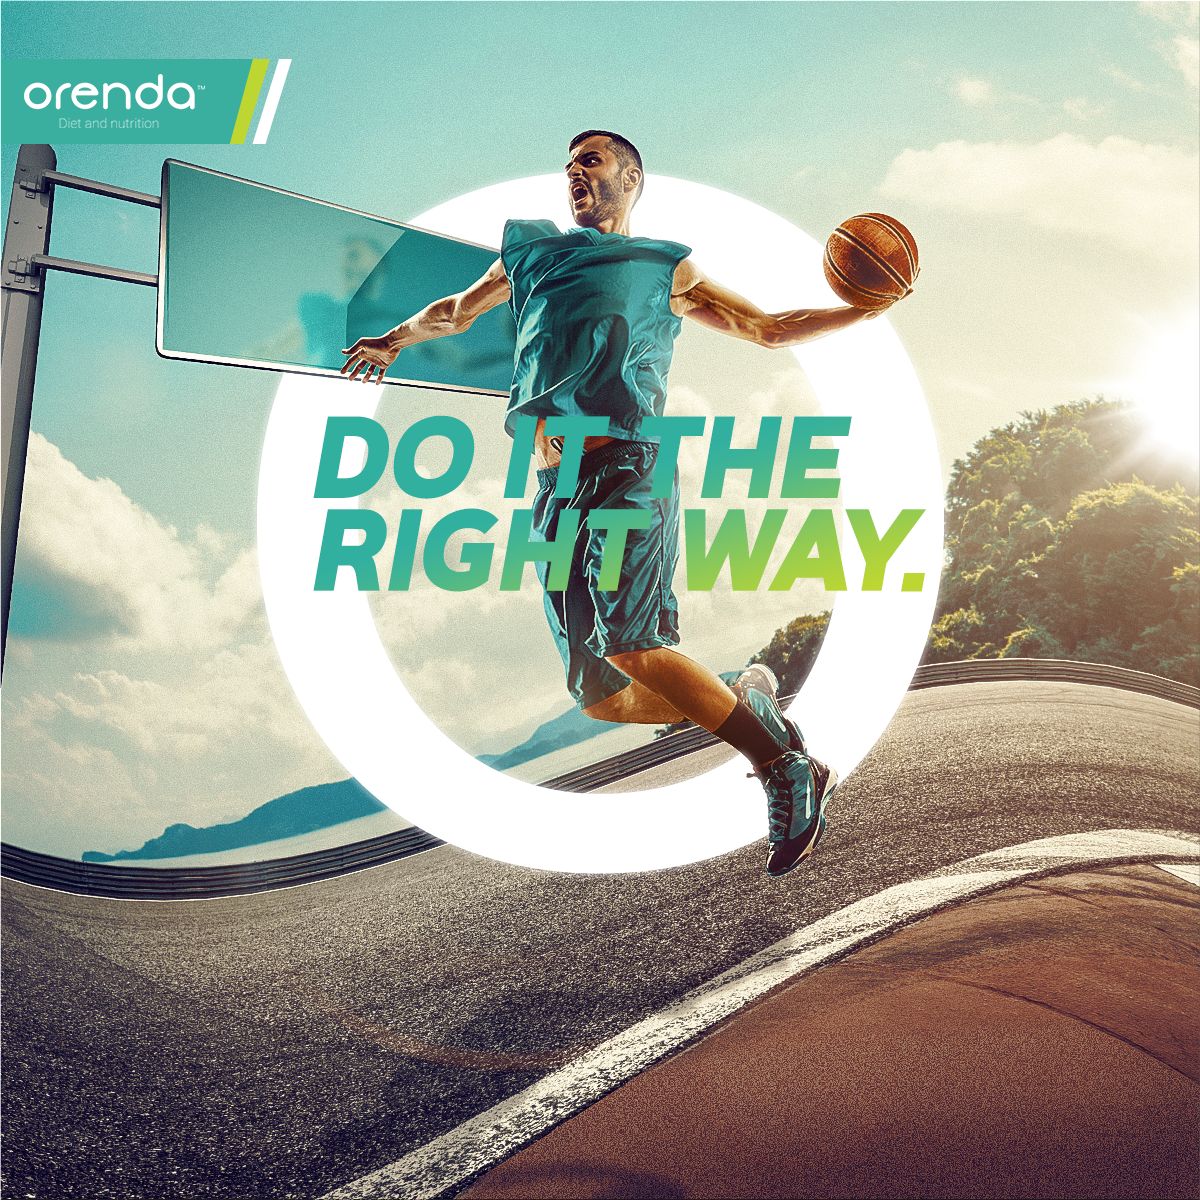 Orenda "Do It The Right Way" | ad Ruby